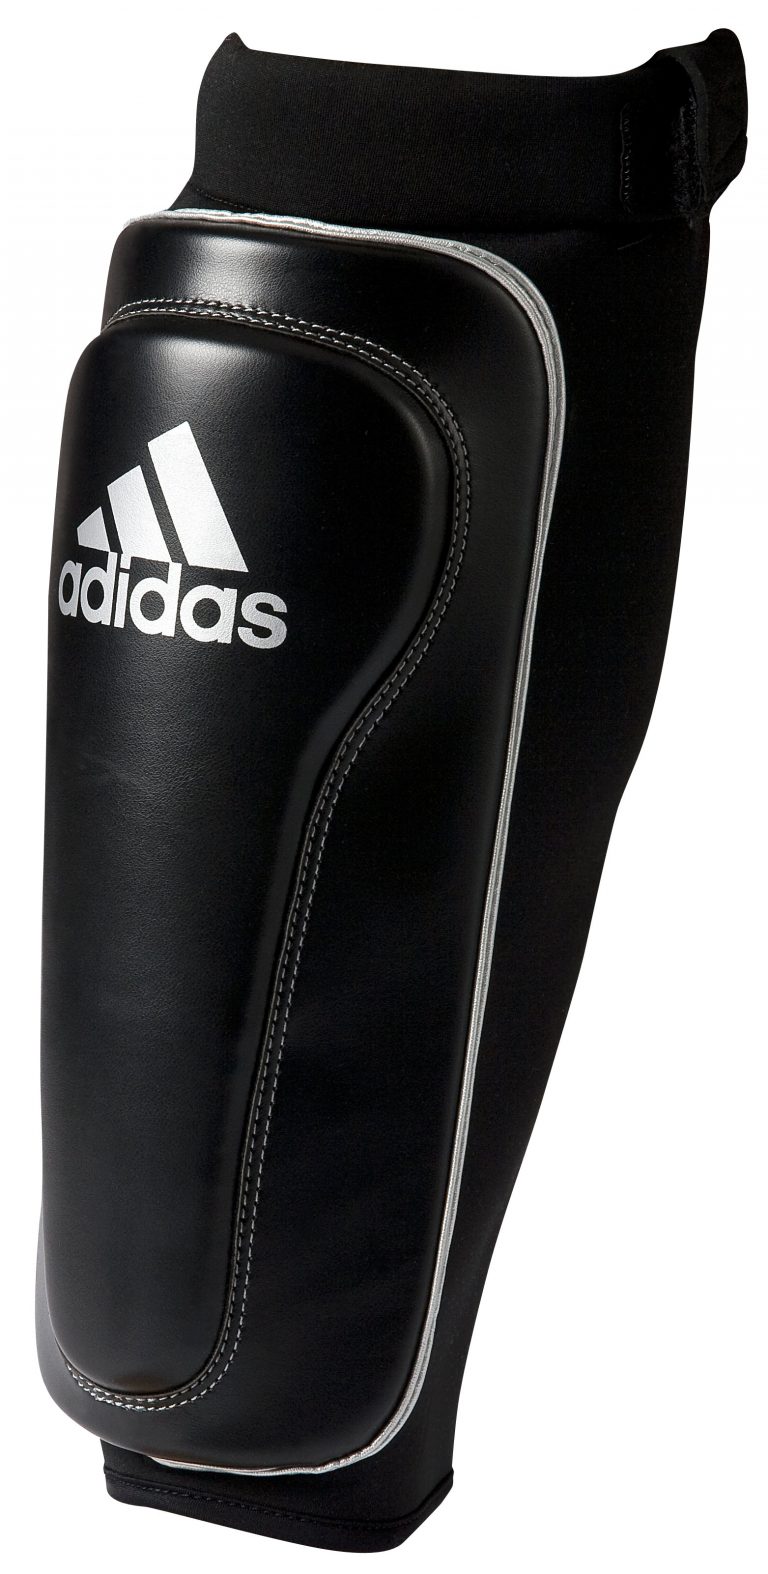 ultimax-epikalamides-me-gel-adibpus01-adidas_sJyxg.jpg